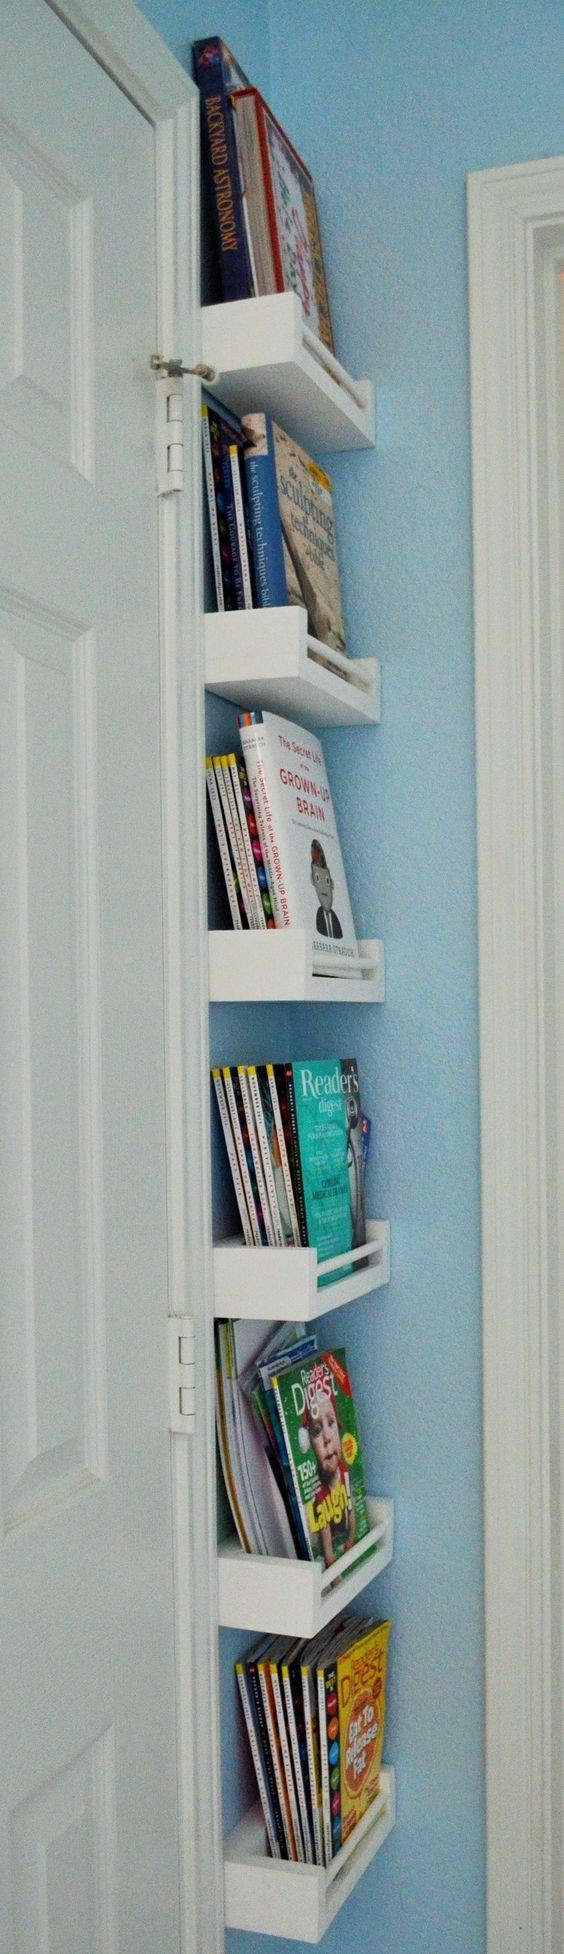 20 diy corner shelves to beautify your awkward corner 2017